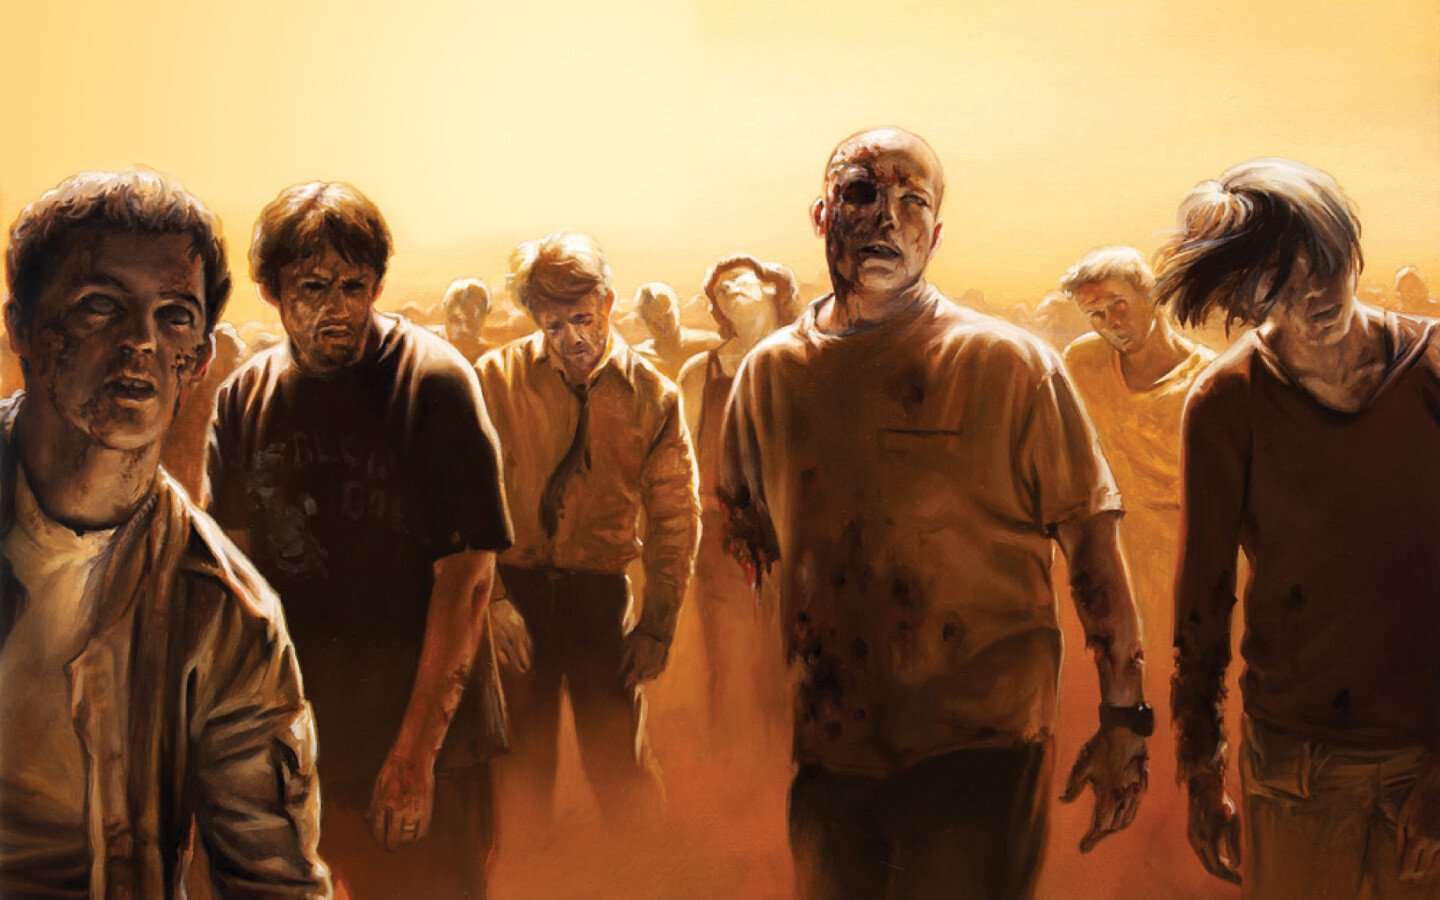 Zombies-David-Palumbo-New-Hd-Wallpaper.jpg